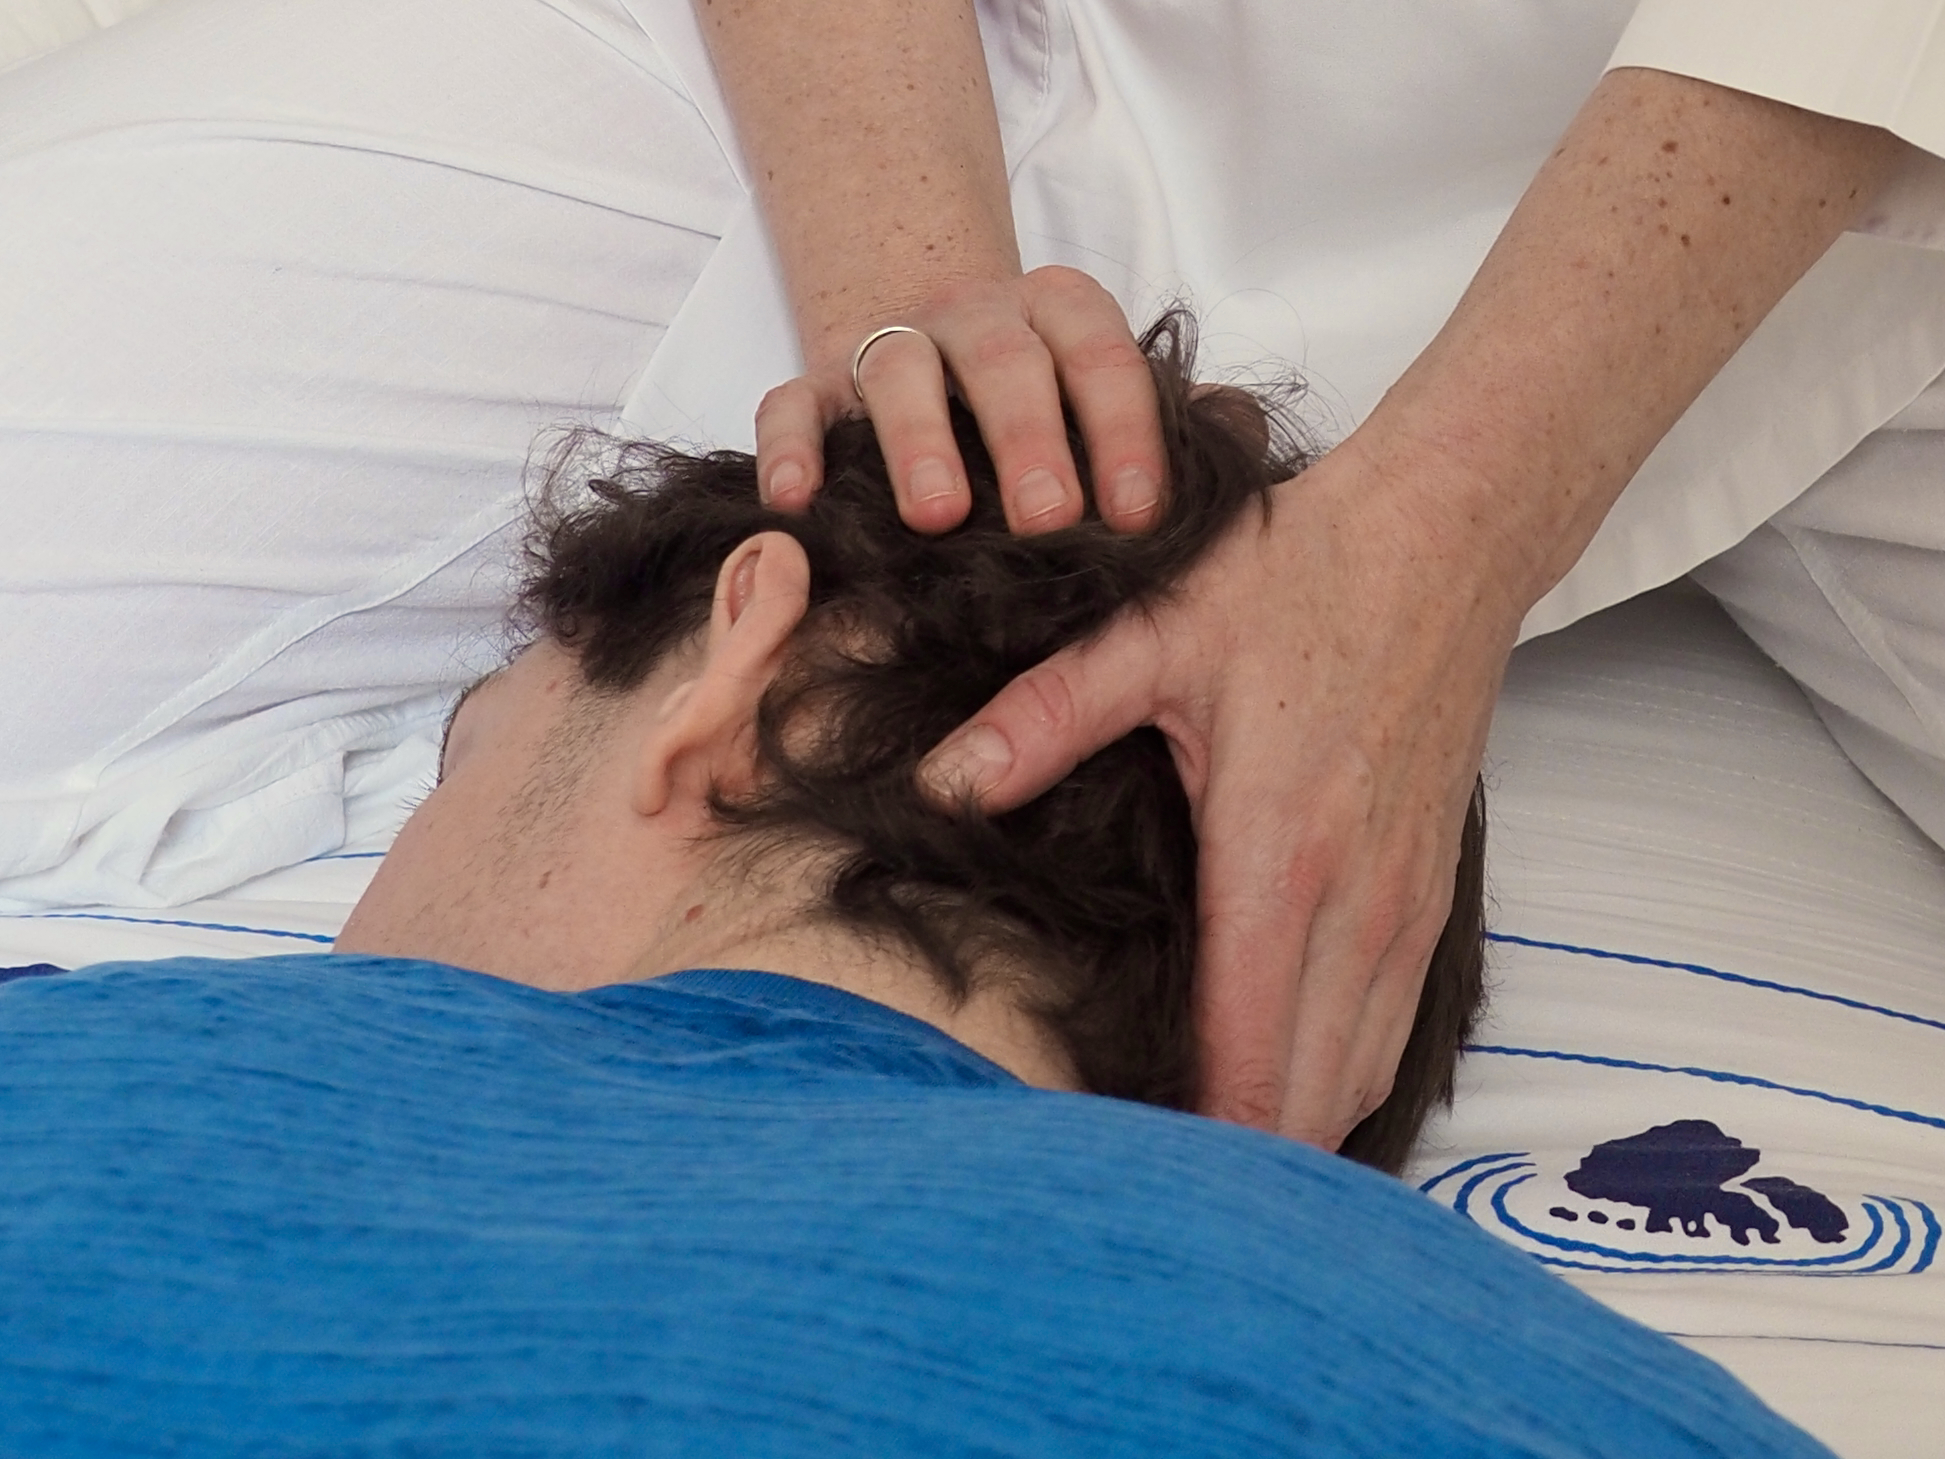 Alexandra Gelny bei einer Sei-Ki Behandlung am Kopf (Nahaufnahme).